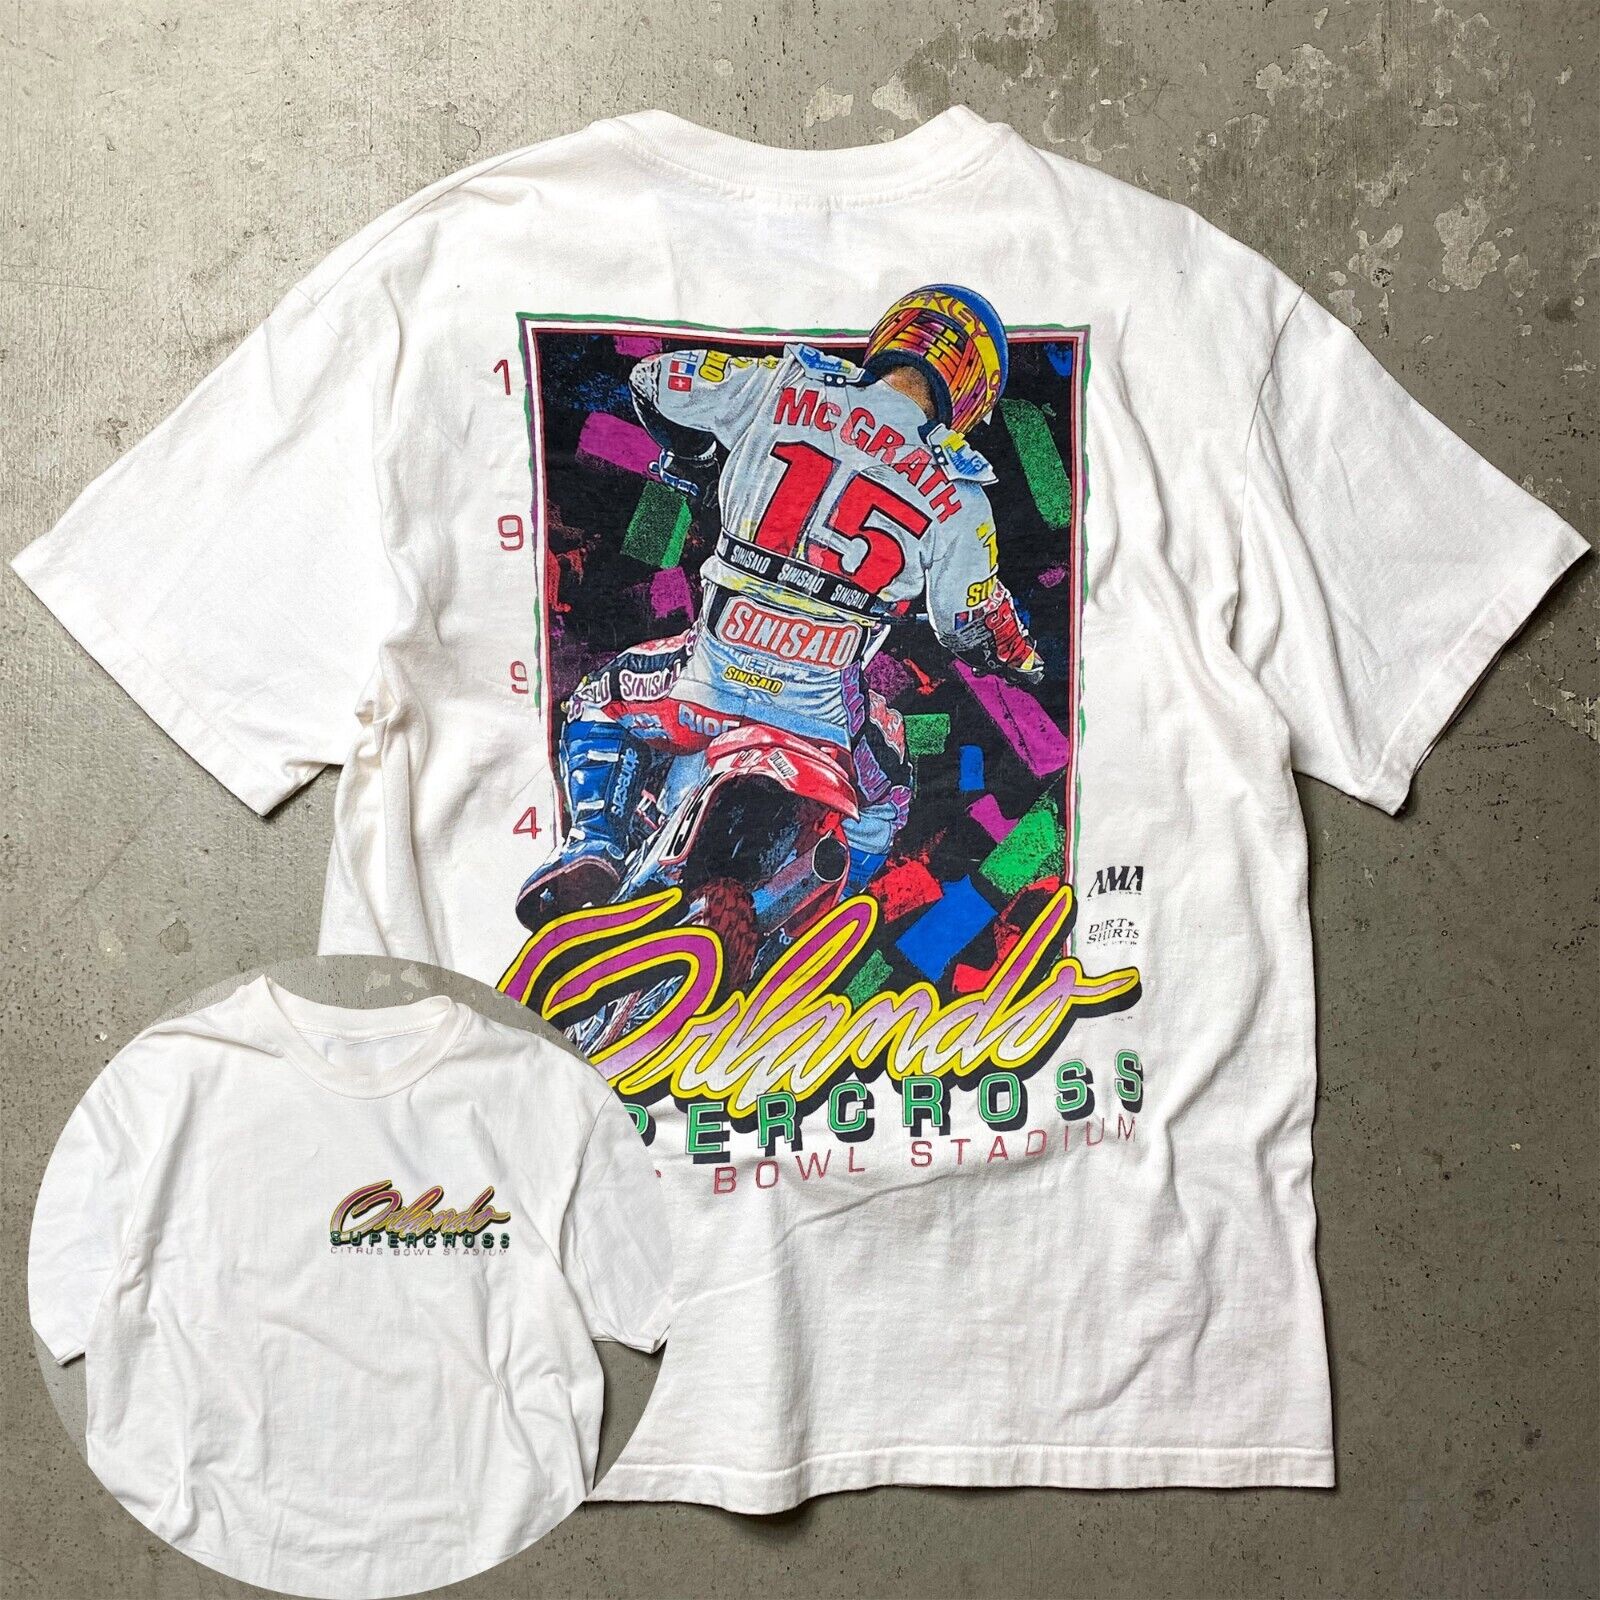 NOS Vintage 1994 Orlando Supercross T-Shirt Cotton Unisex Size S-3XL